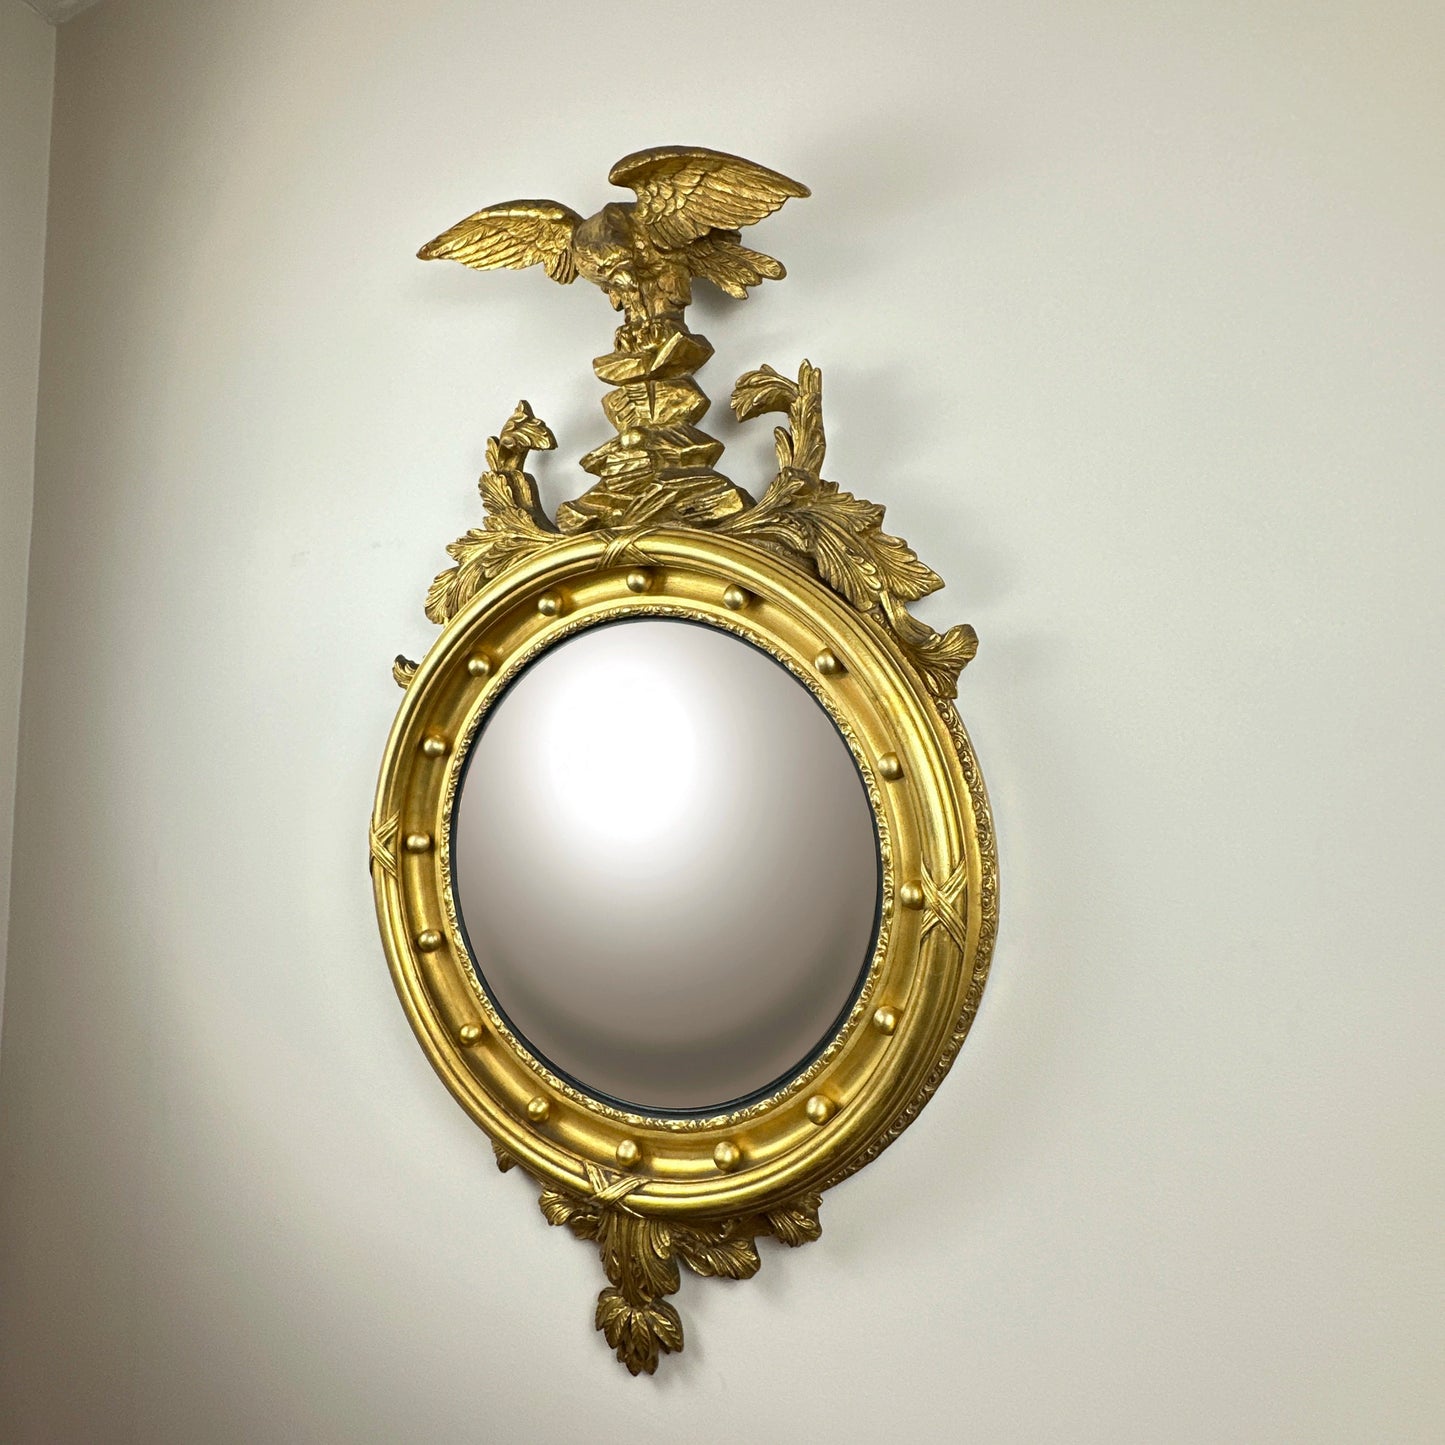 Ornate “Bulls-eye” Convex Mirror — Late 19th/early 20th C.